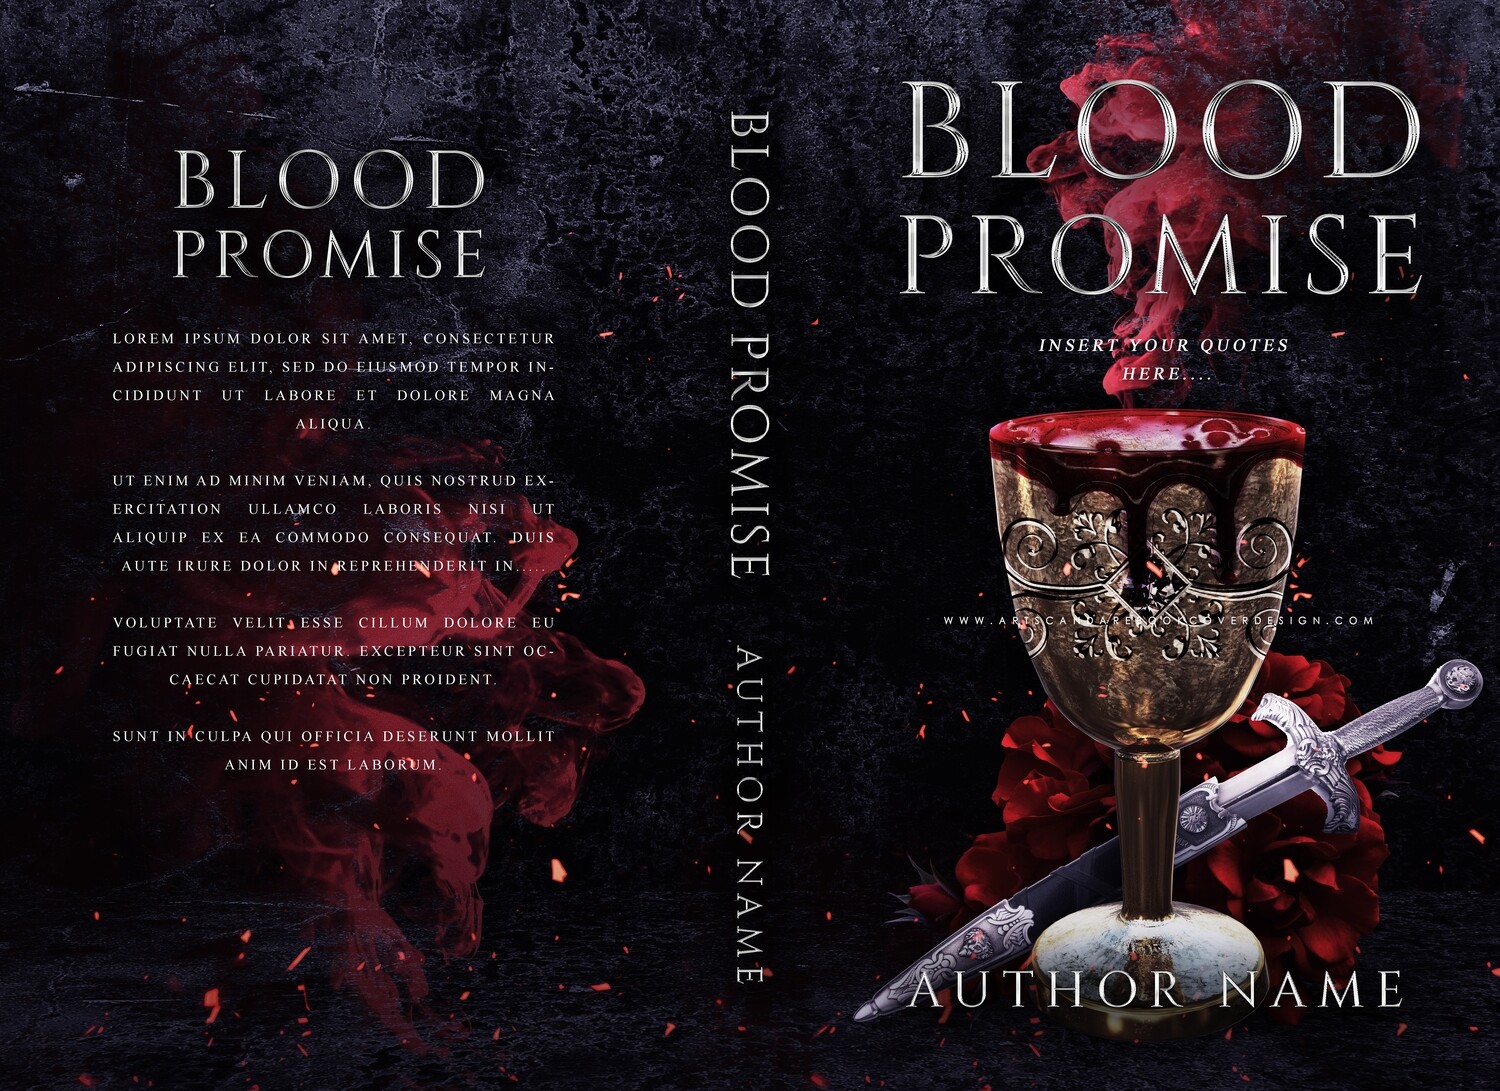 Ebook + Paperback: Blood Promise